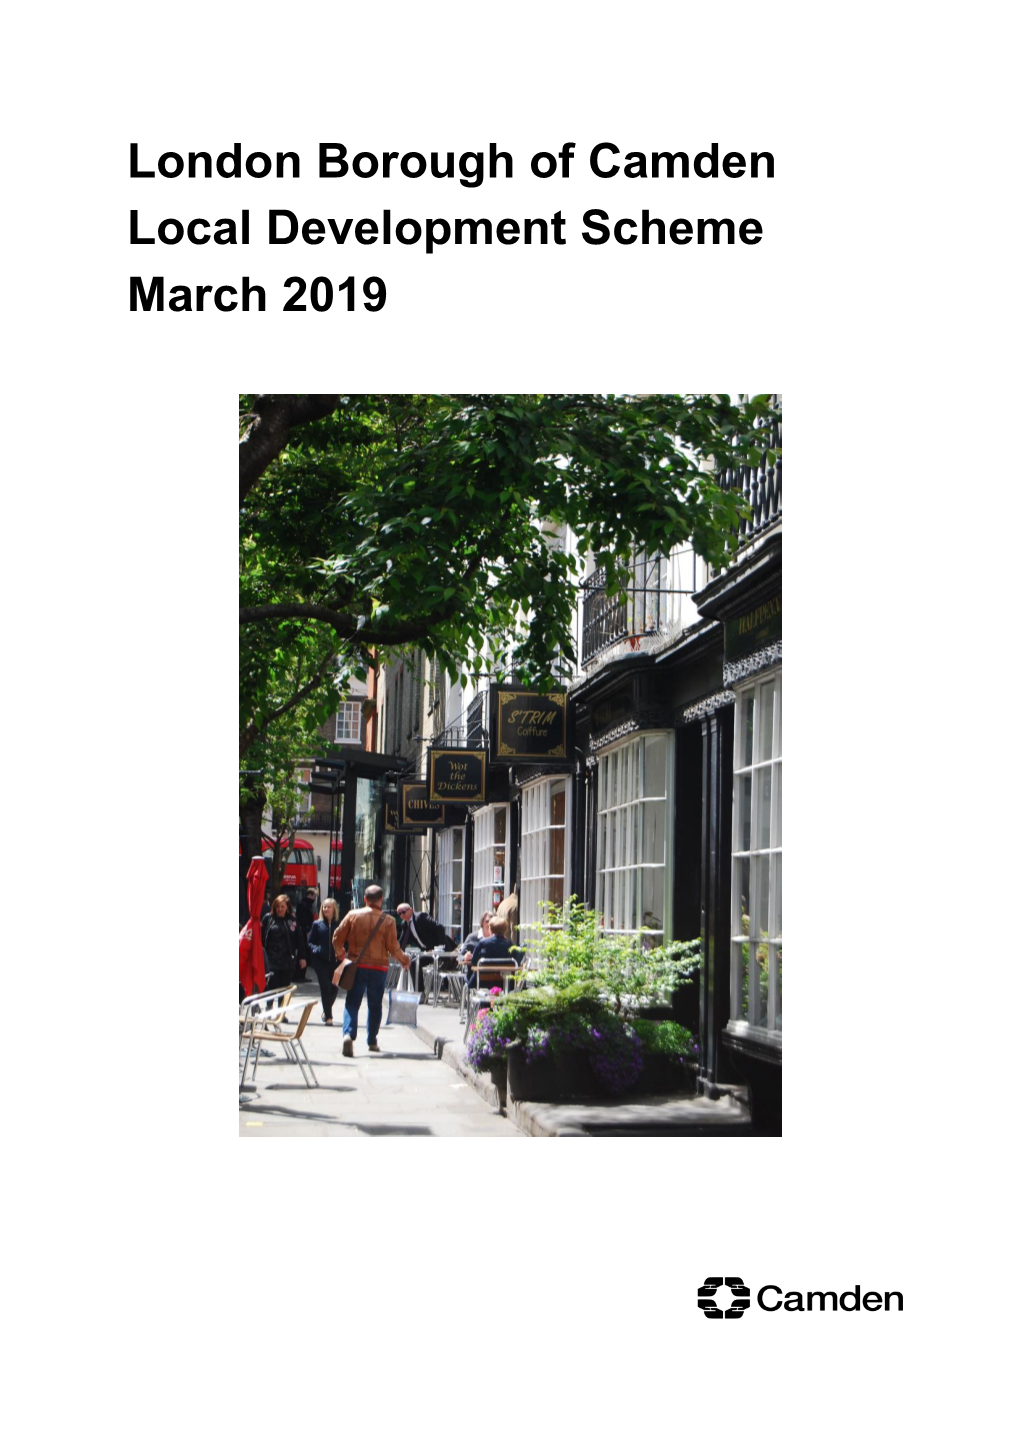 London Borough of Camden Local Development Scheme March 2019